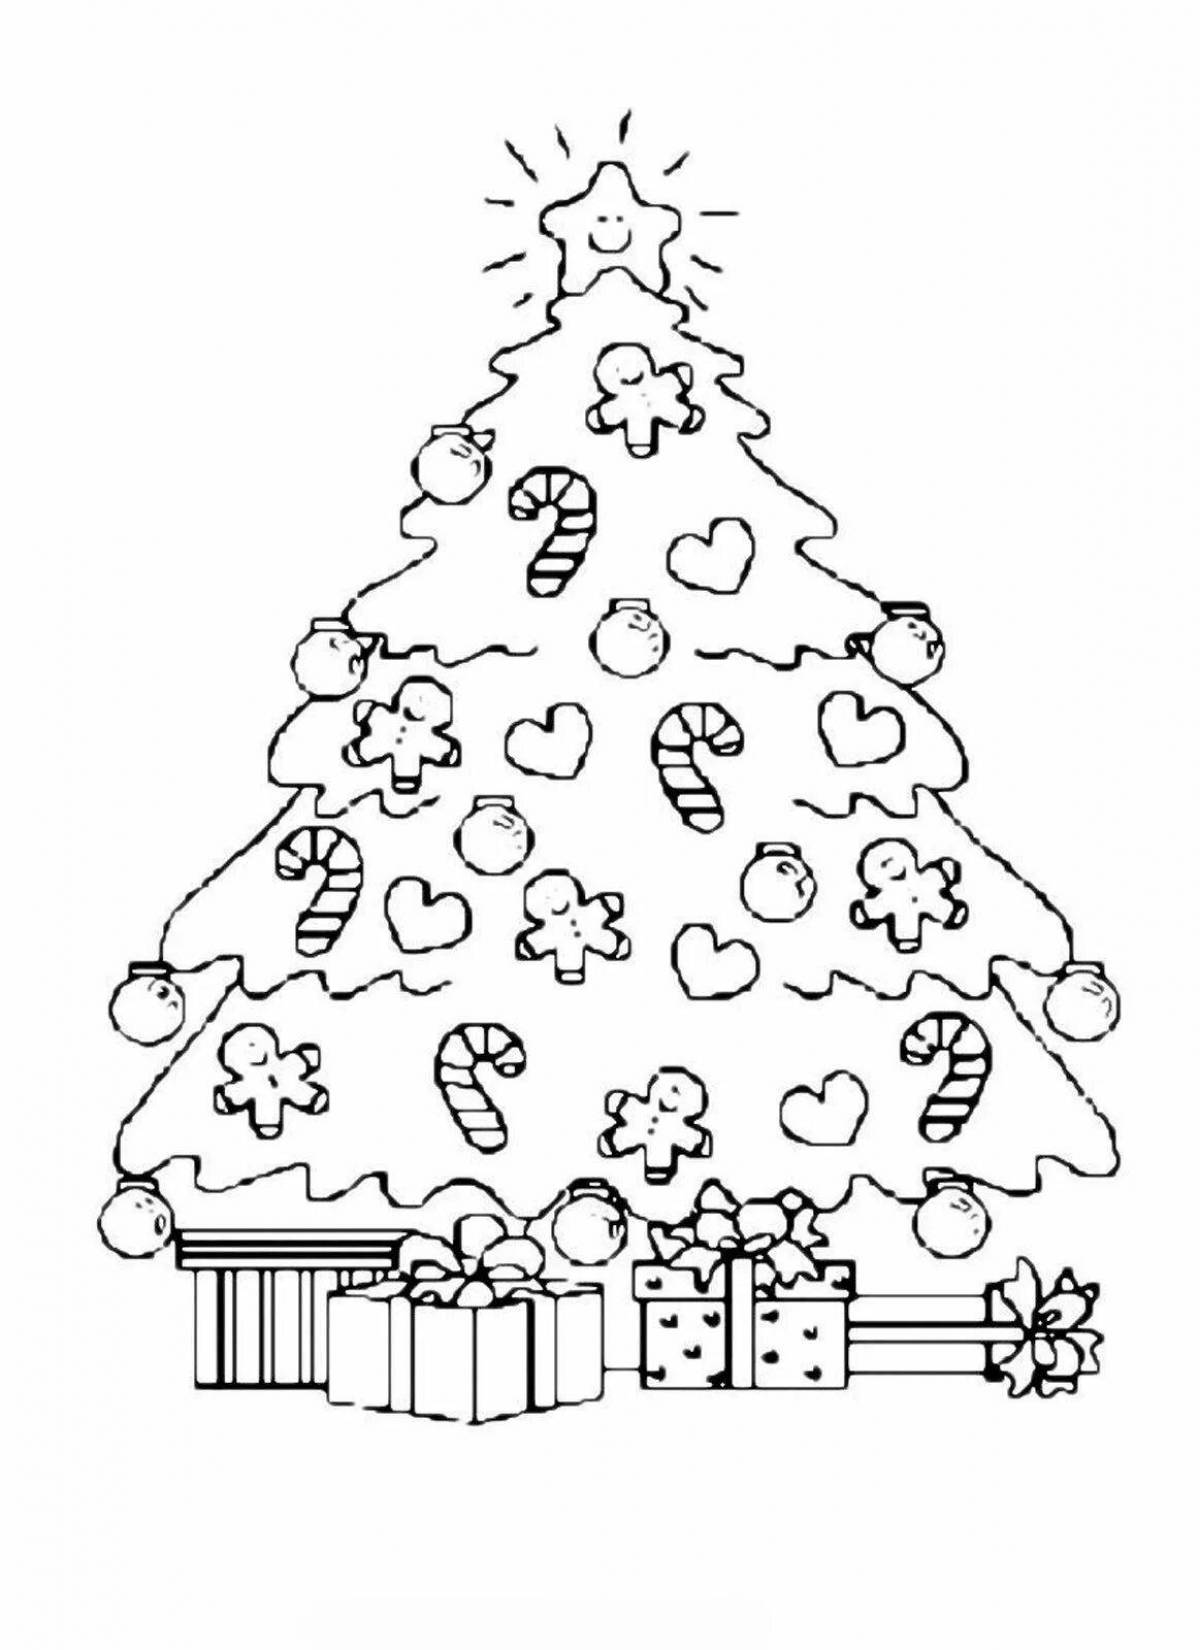 Exuberant Christmas tree with toys